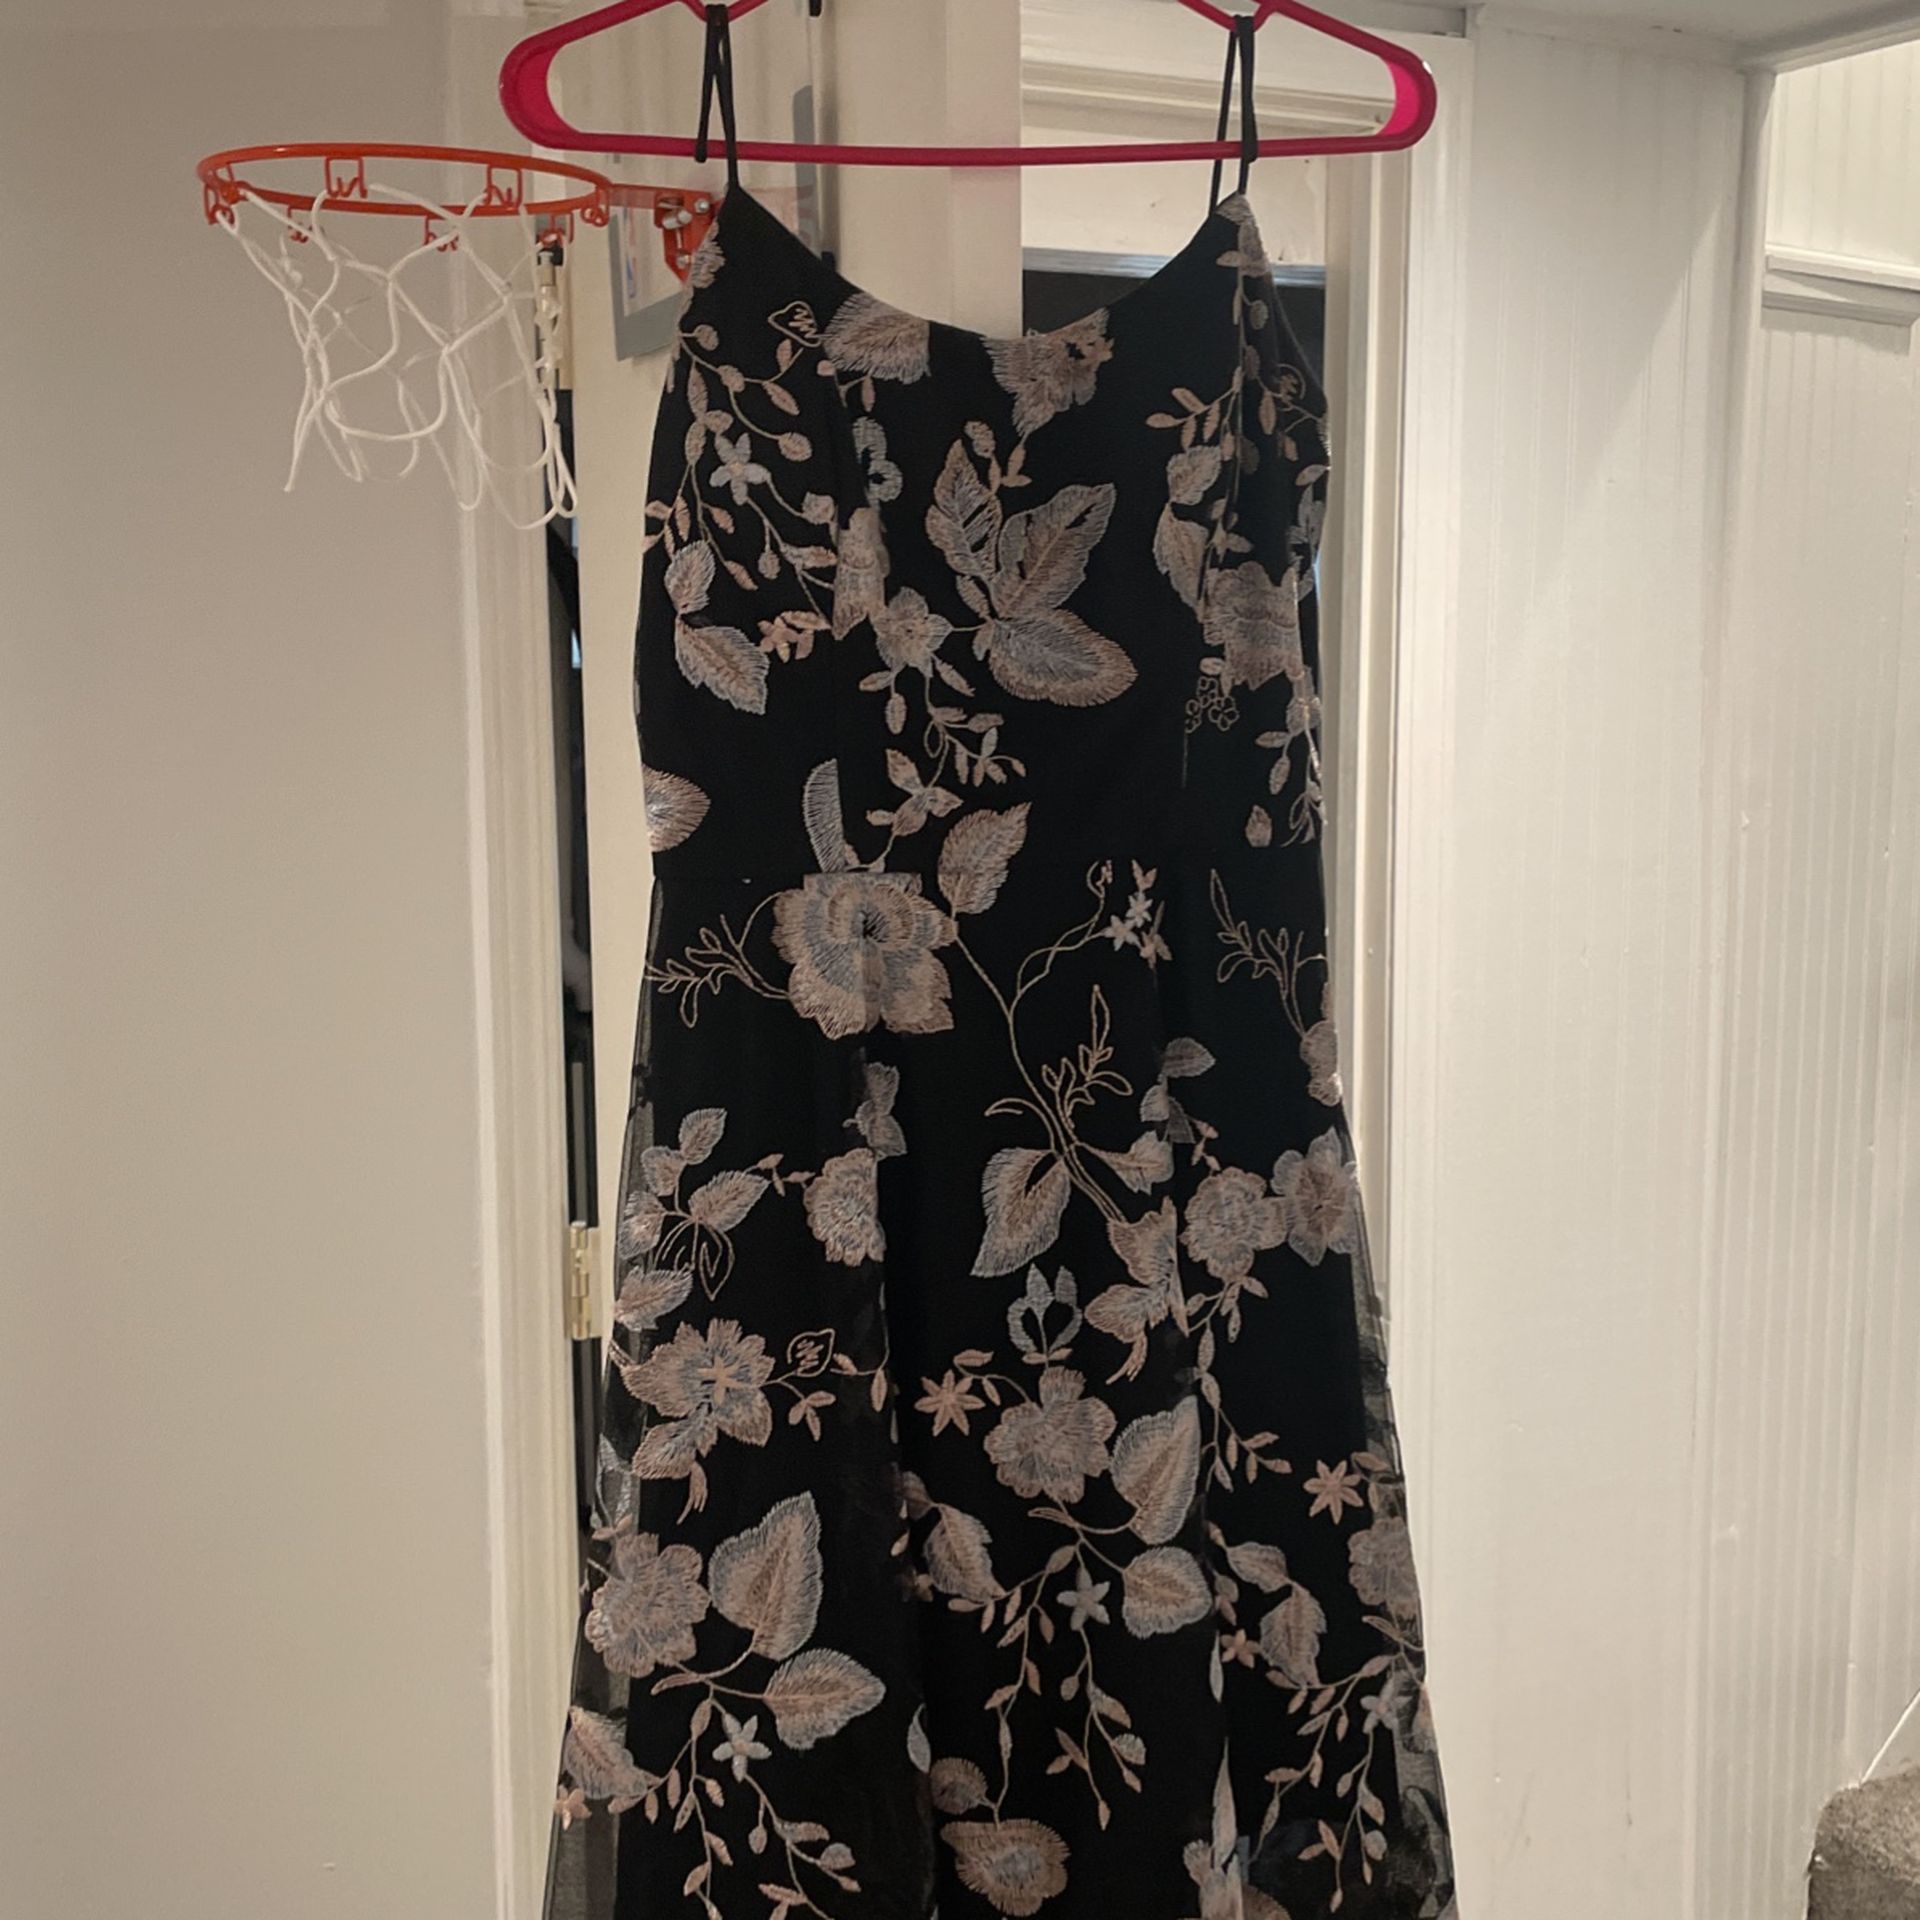 size 8 dress